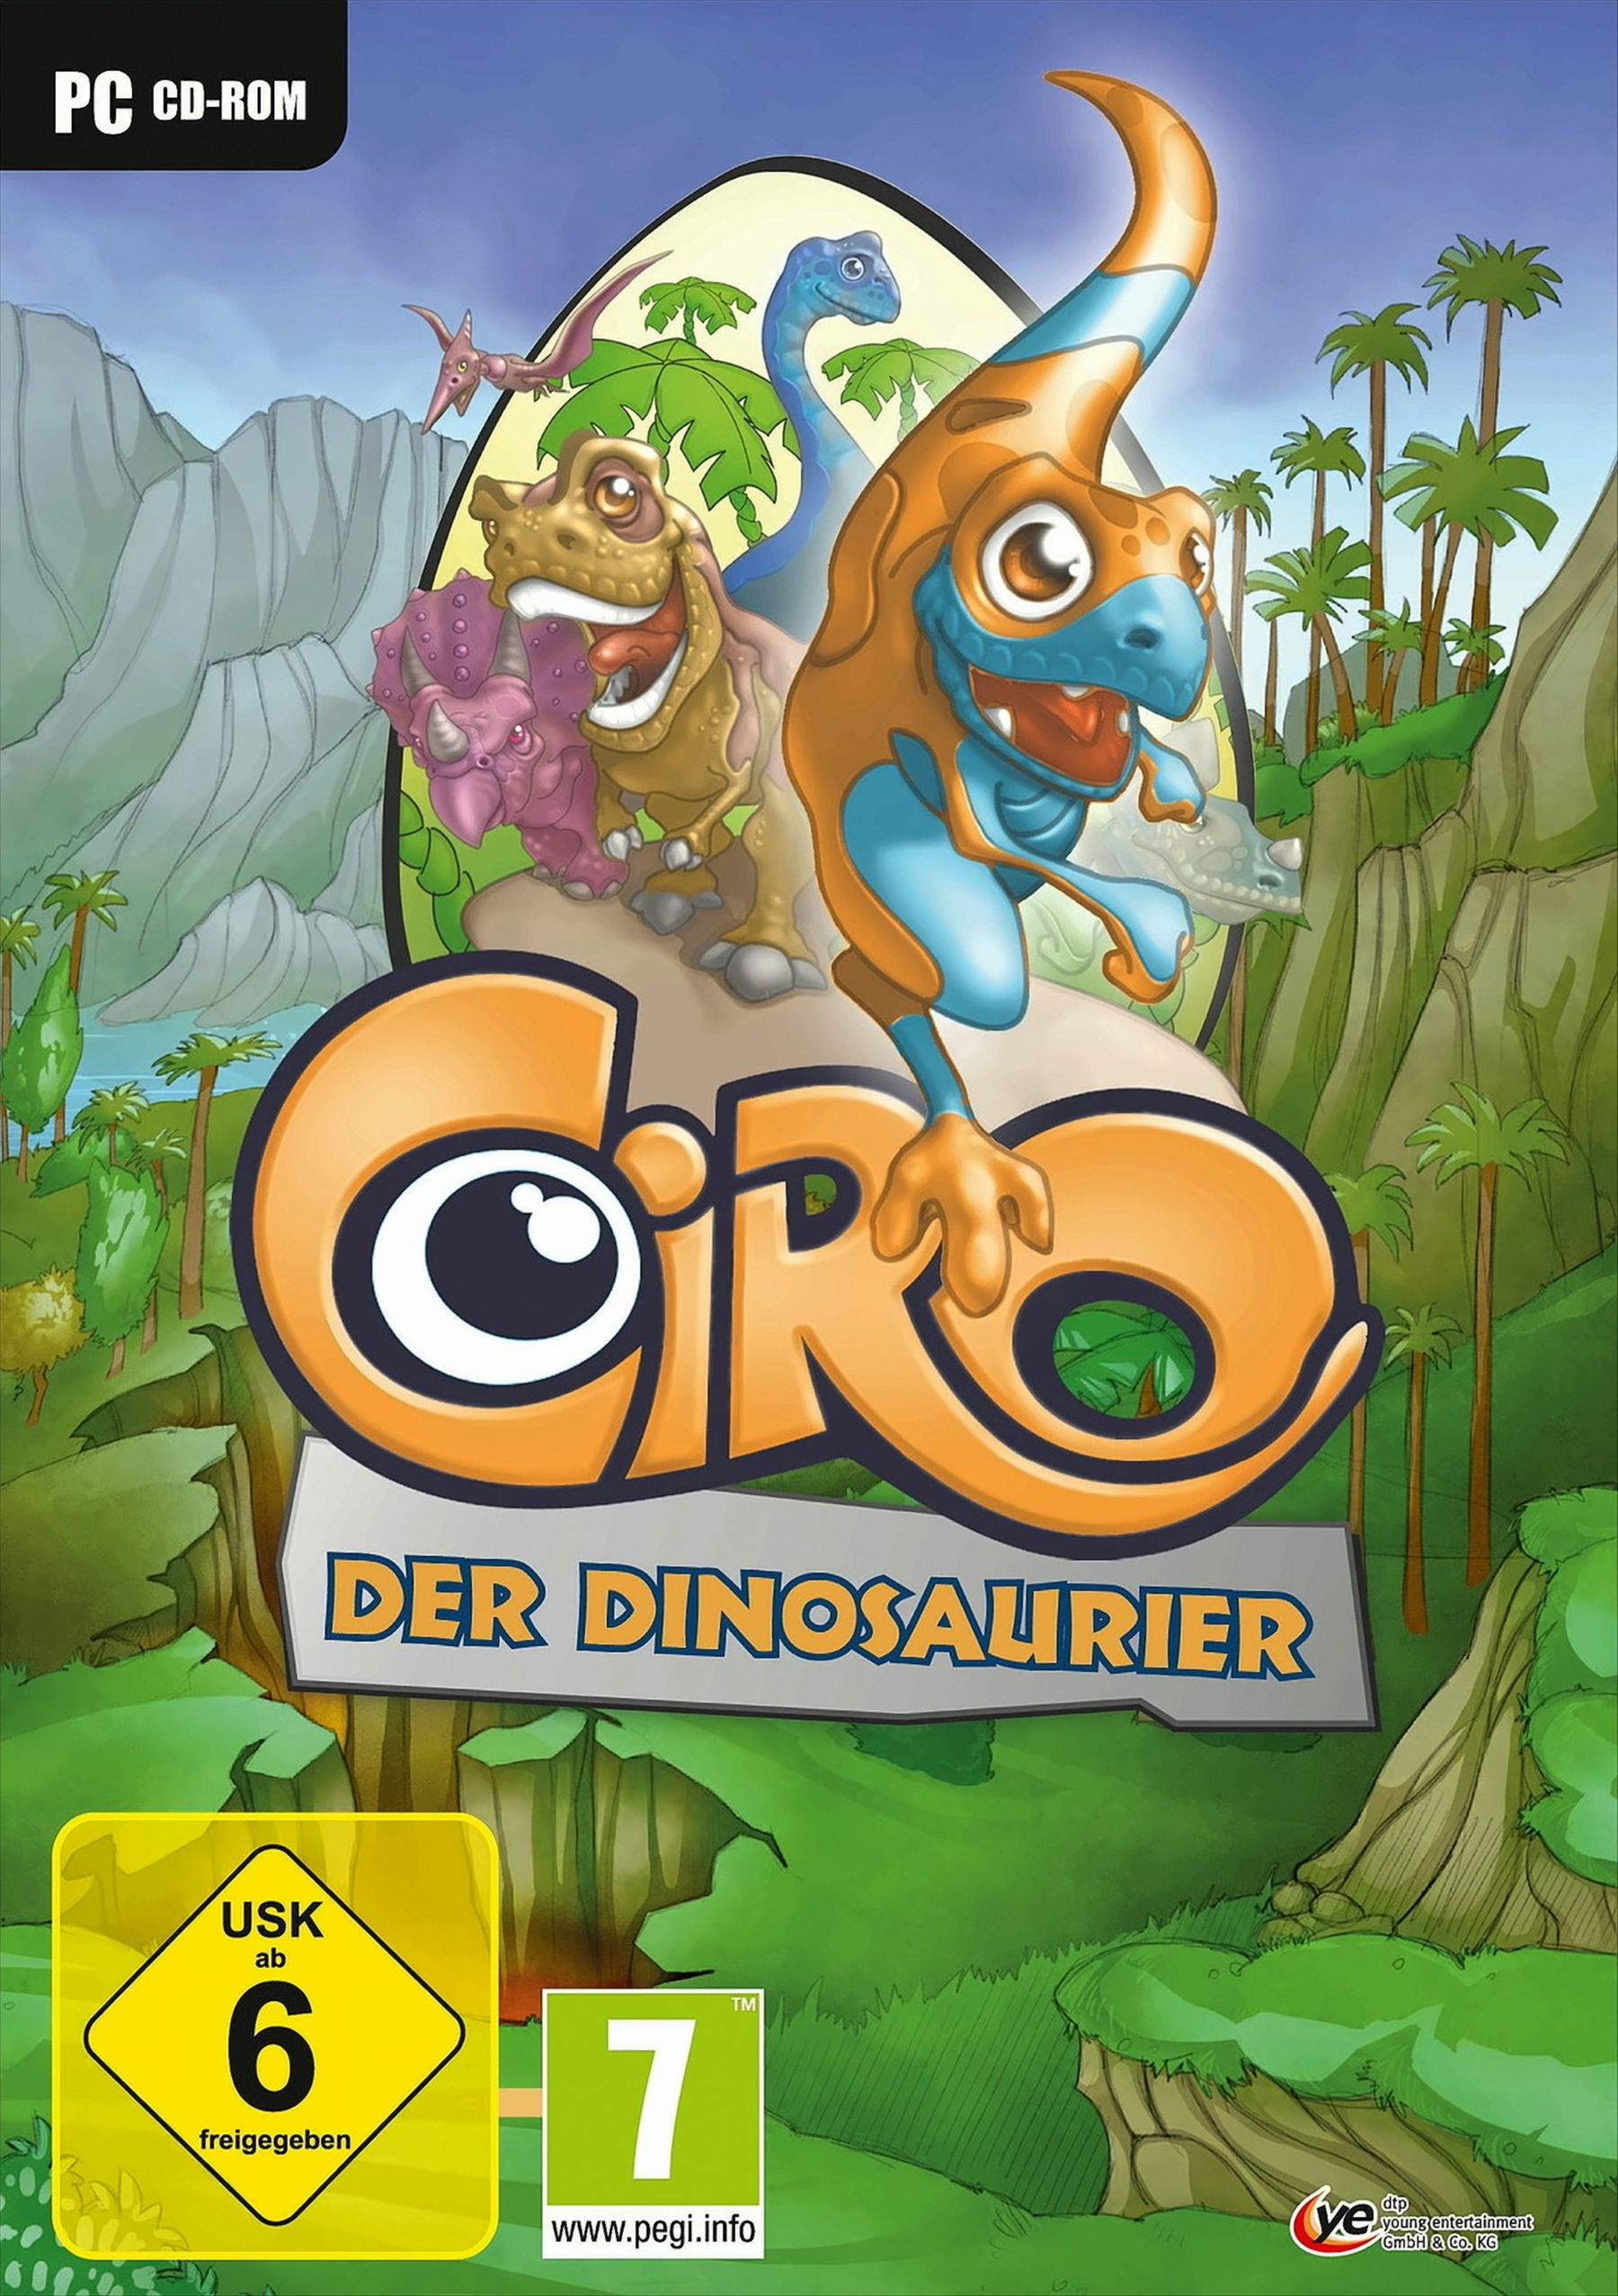 Ciro, der Dinosaurier - [PC]